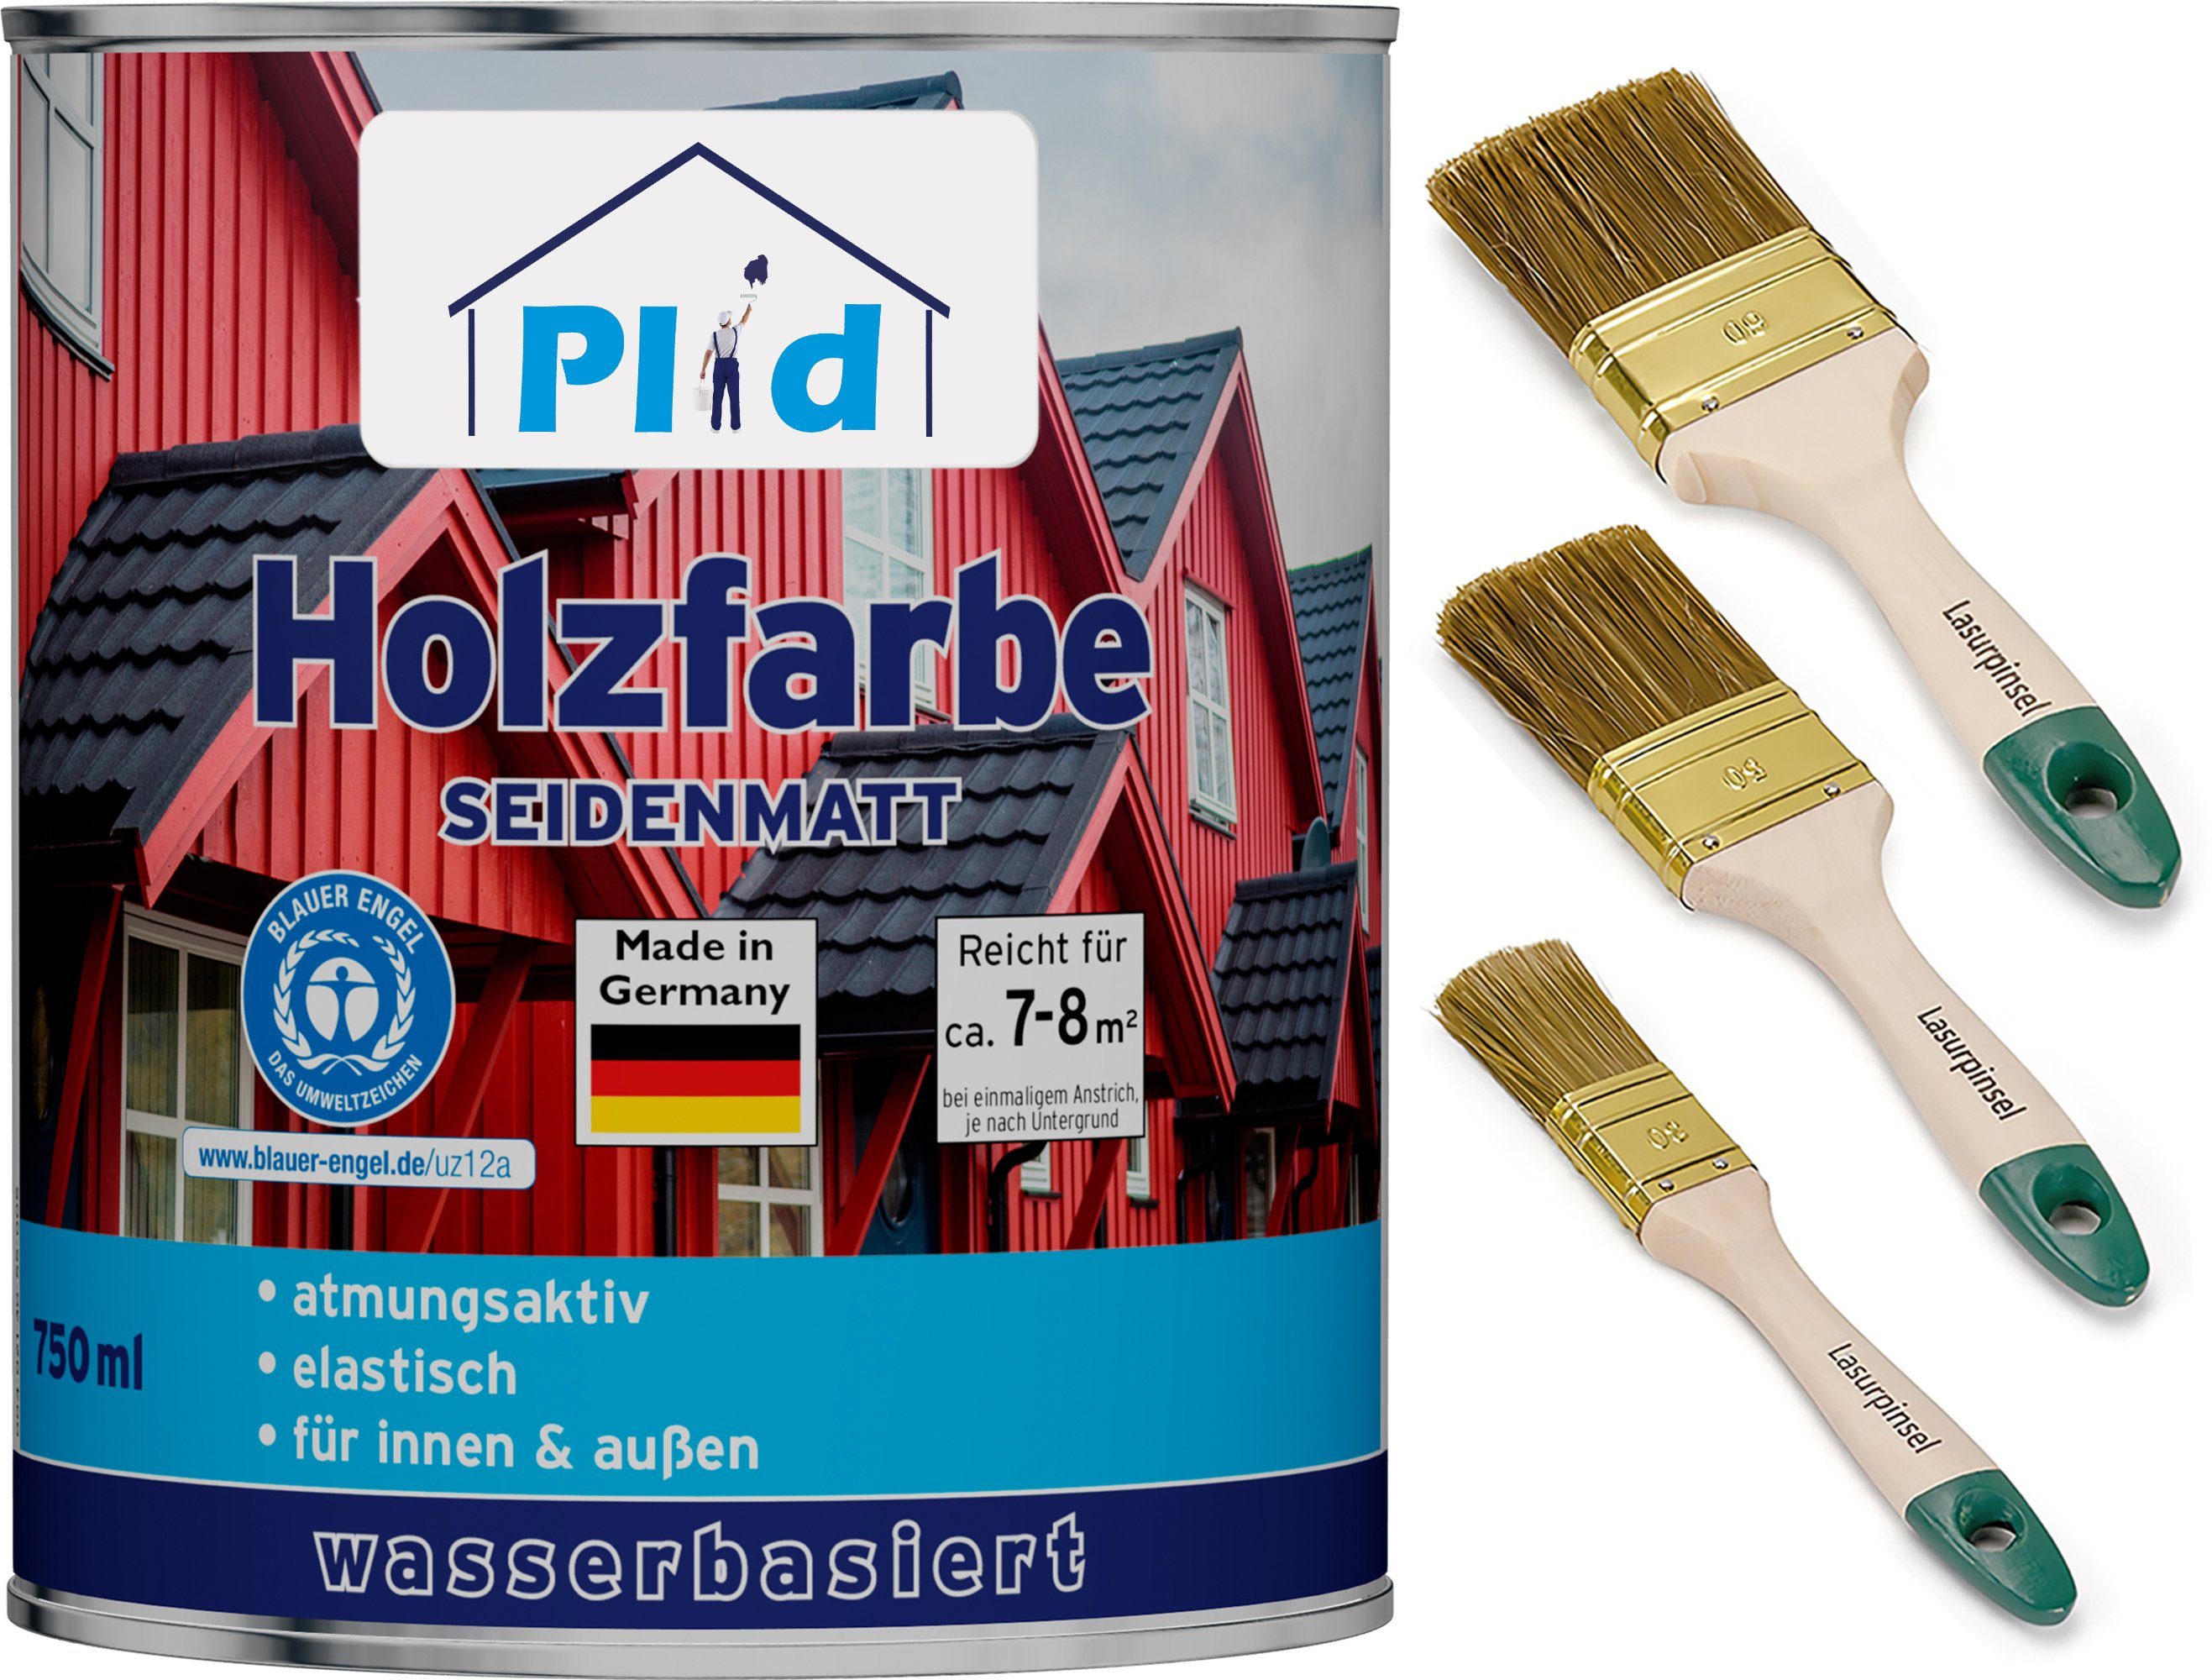 plid Holzlack Premium Holzfarbe Holzlack Farbe für Holz Pinsel, Schnelltrocknend, verarbeitungsfertig Taubenblau